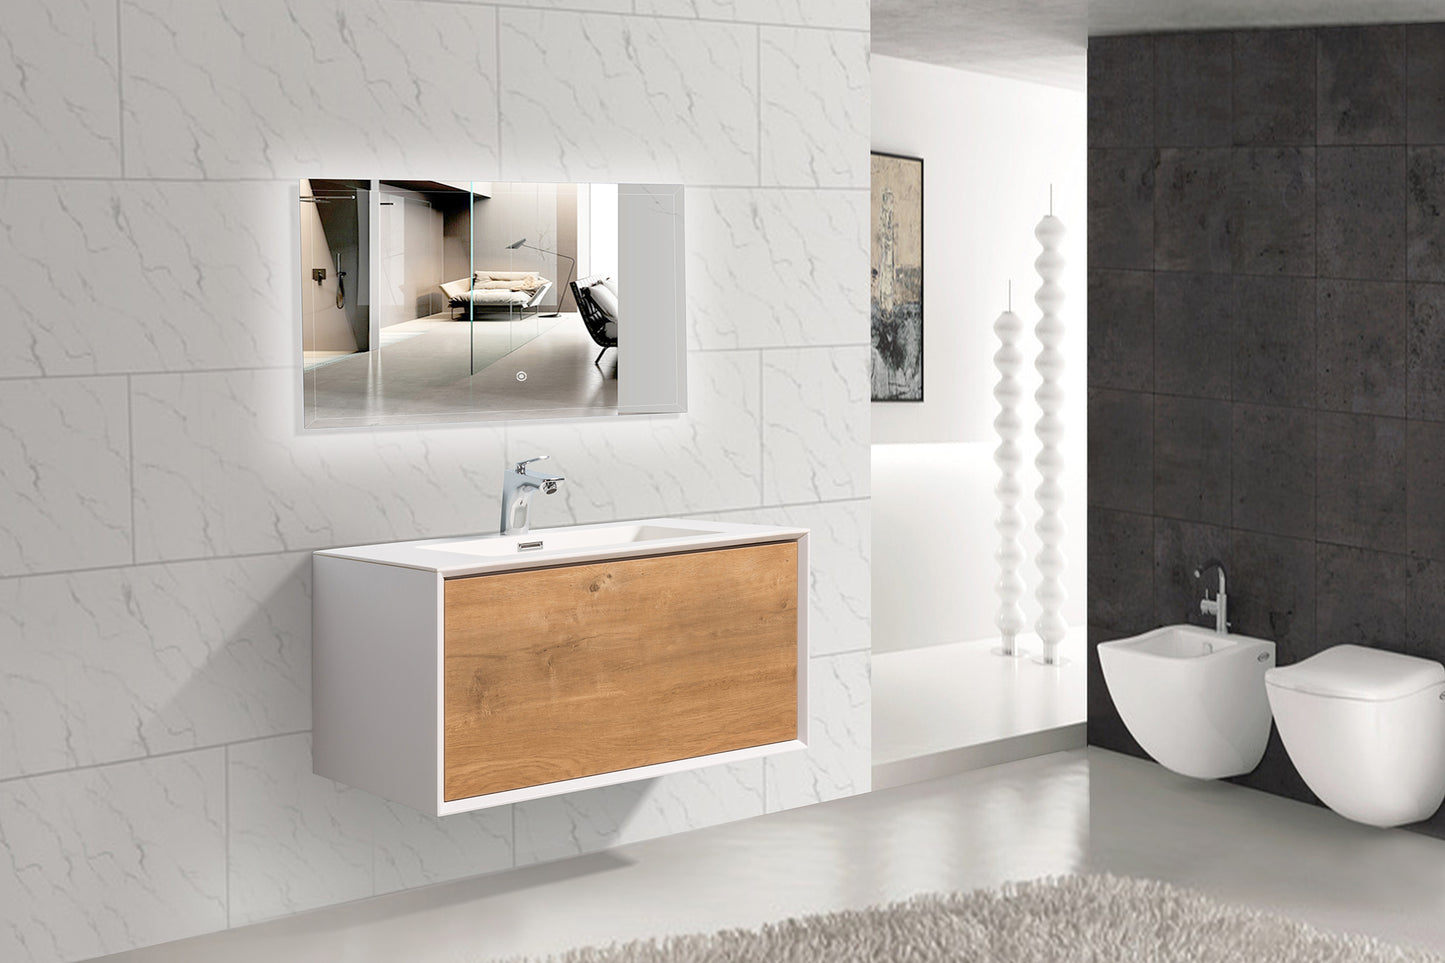 Weston Bathroom Vanity in Oak with White Cultured Marble Top